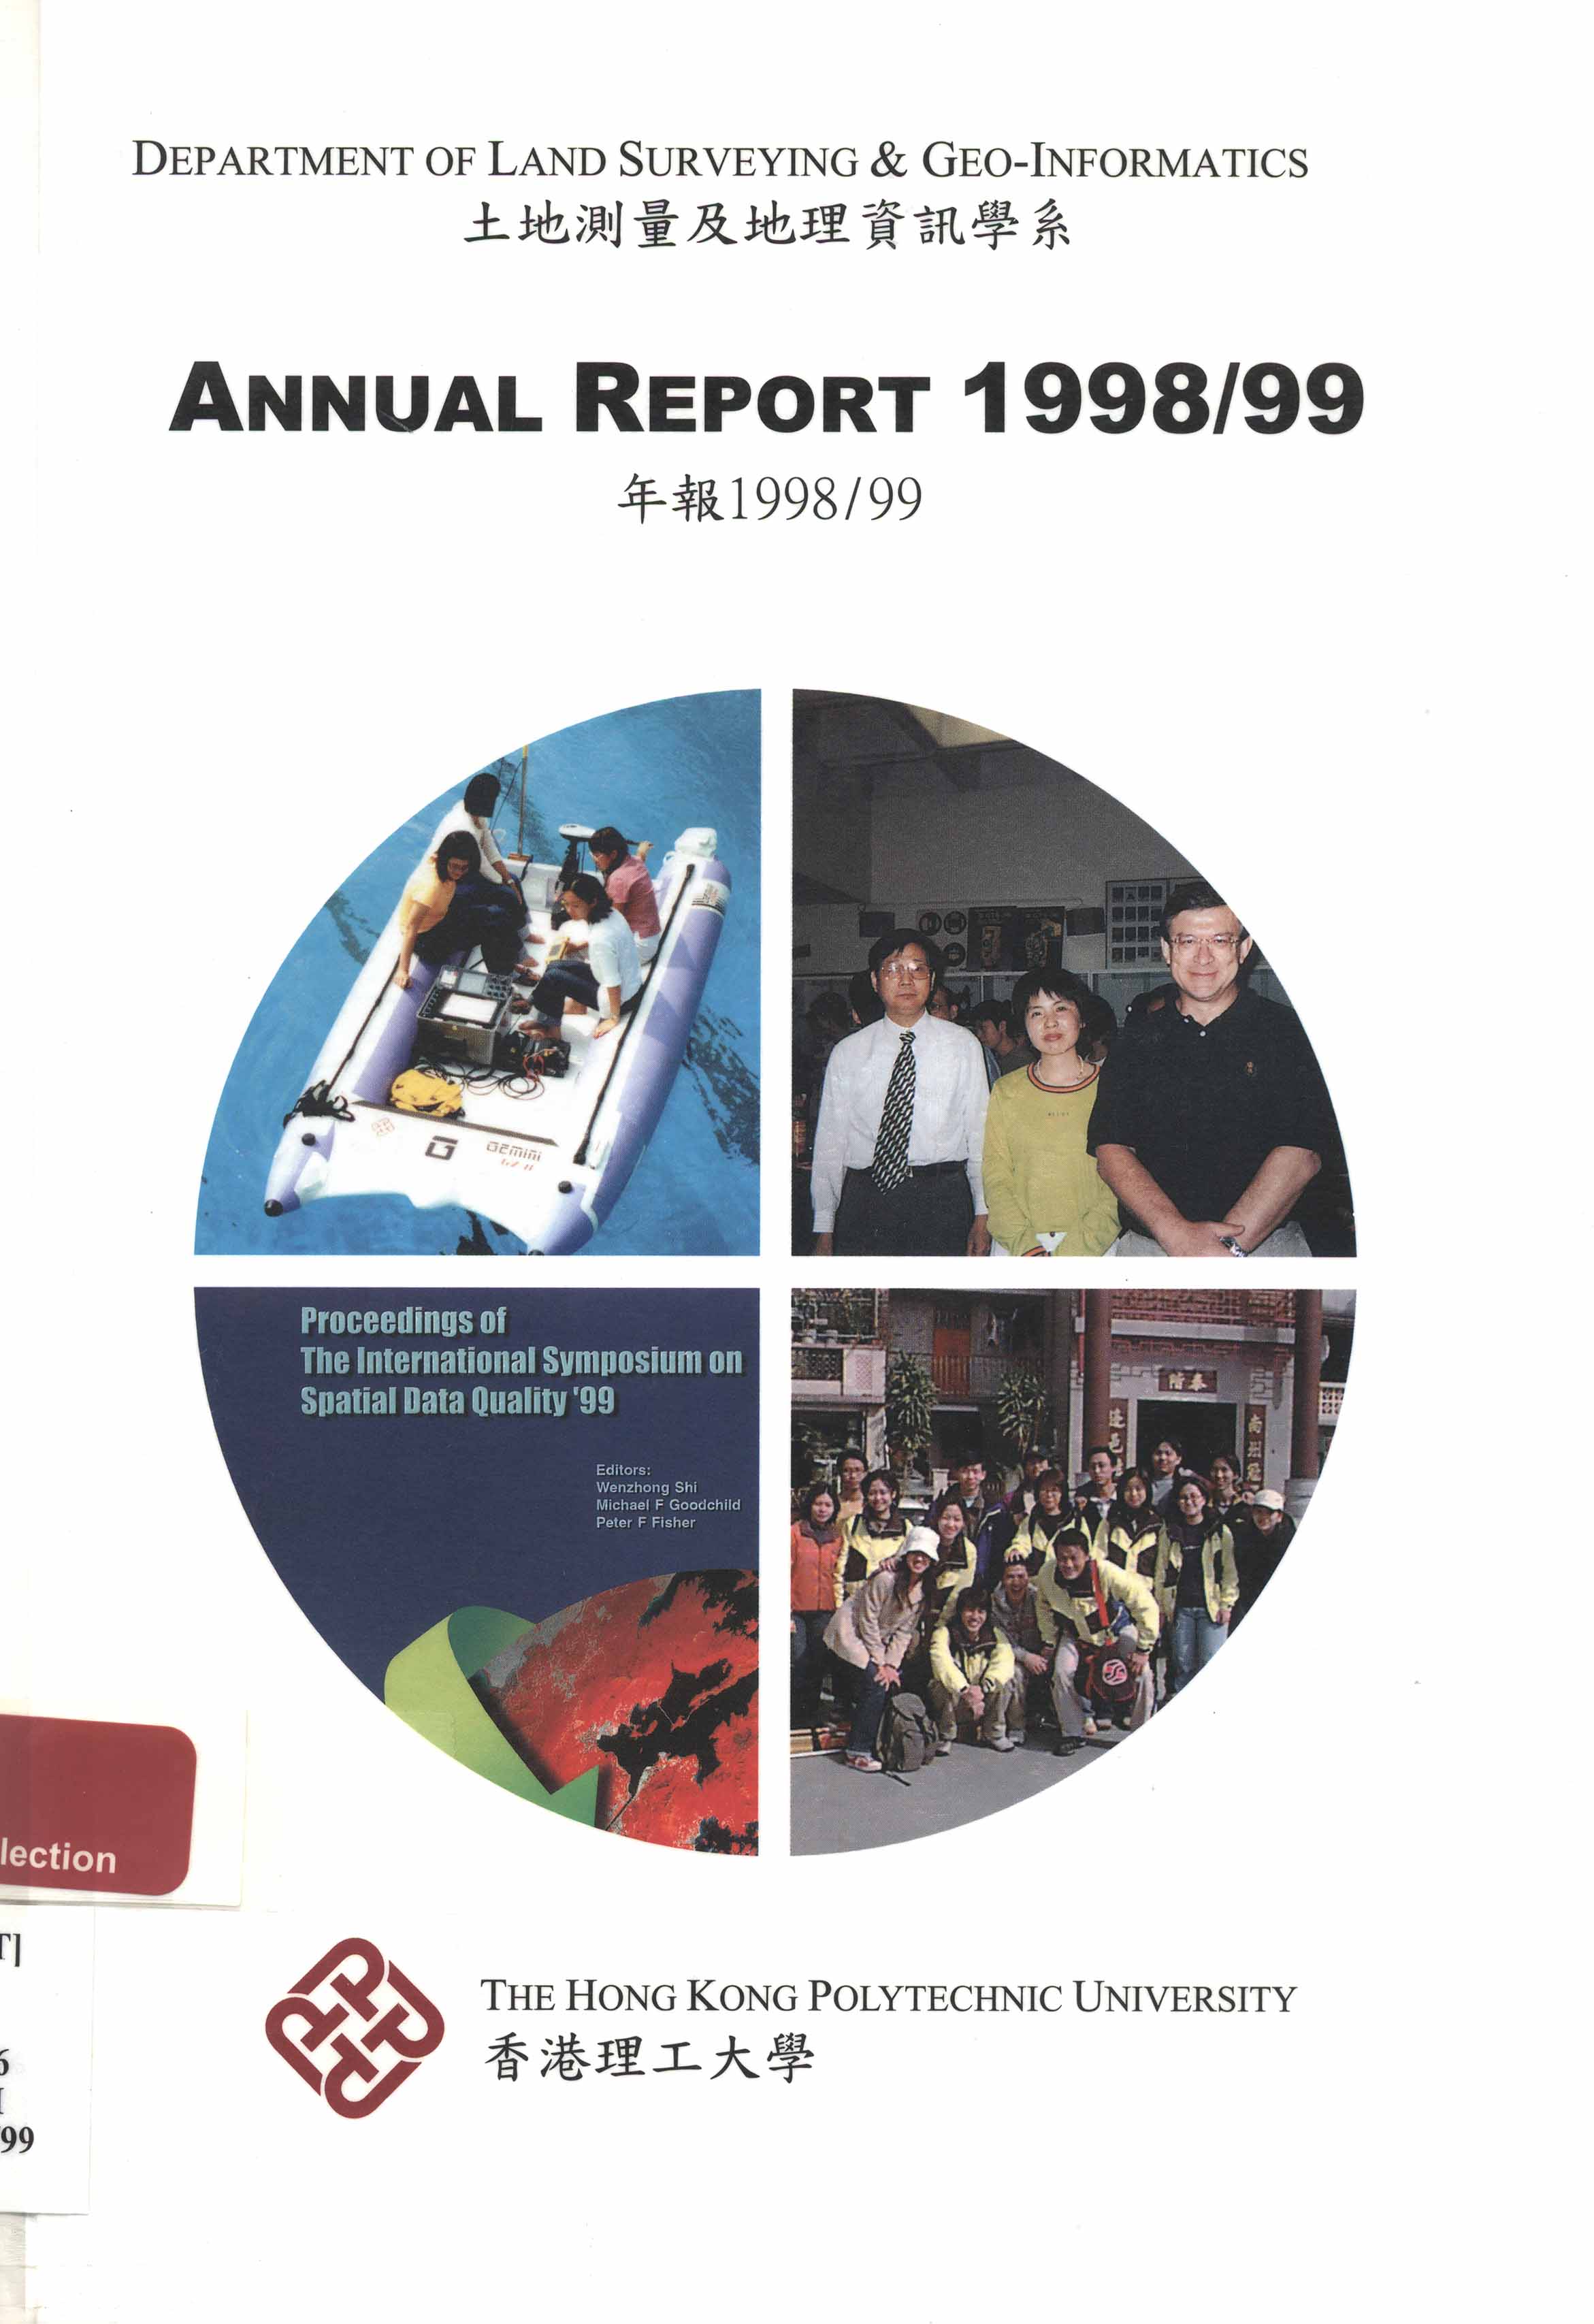 Department of Land Surveying & Geo-Informatics. Annual report 1998/99